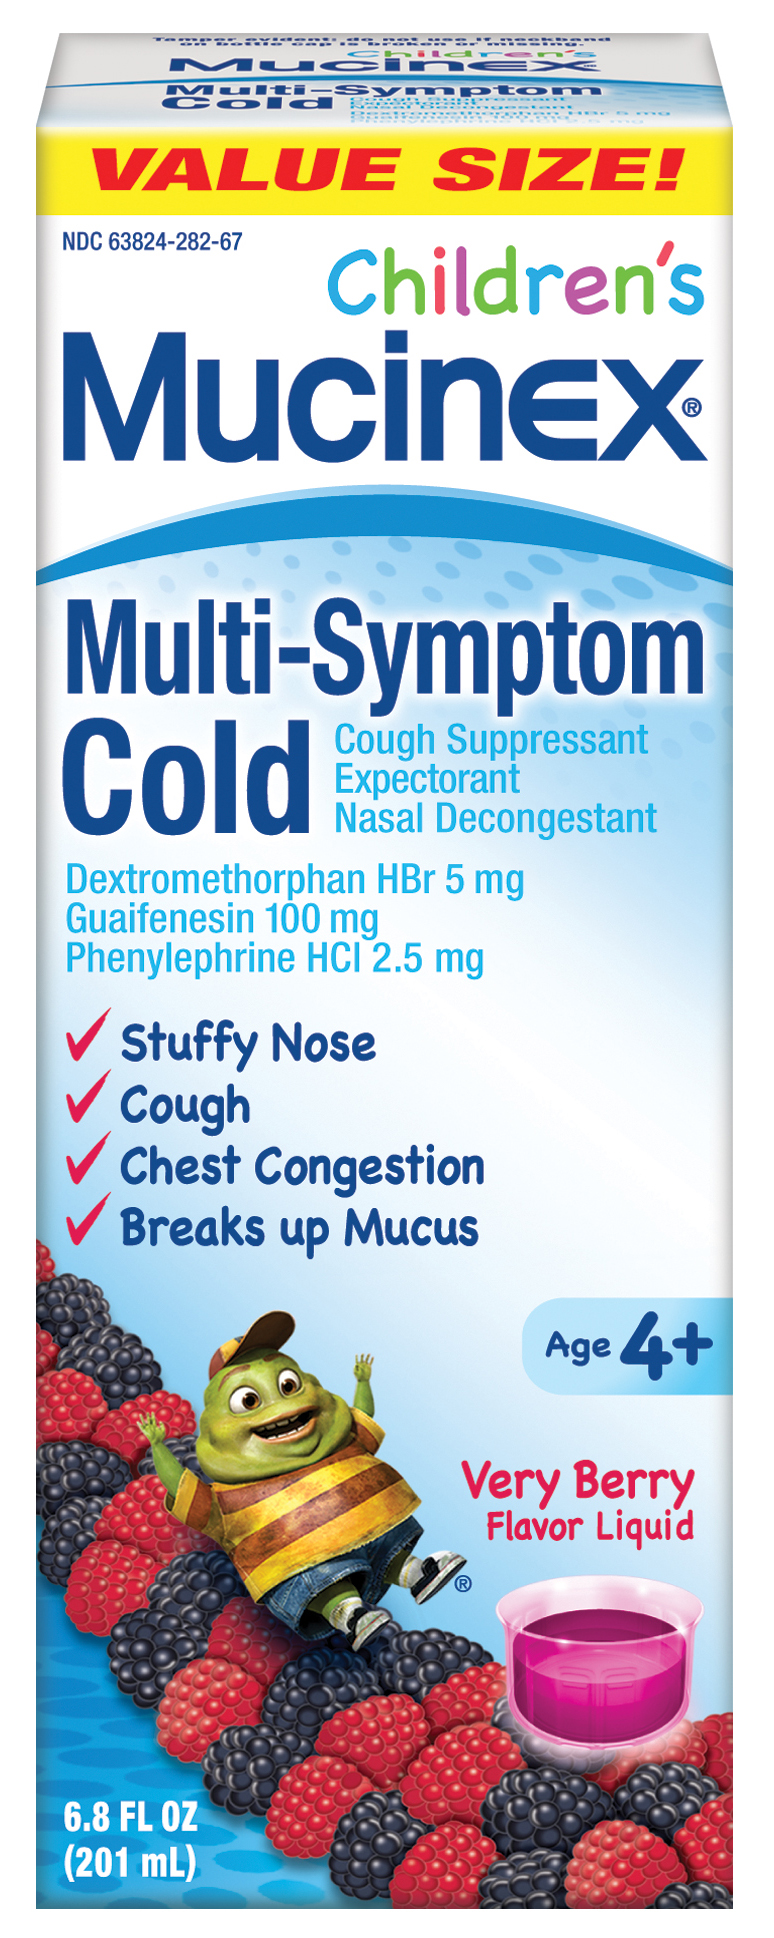 MUCINEX® Children's Multi-Symptom Liquid -Cold Very Berry (Discontinued)